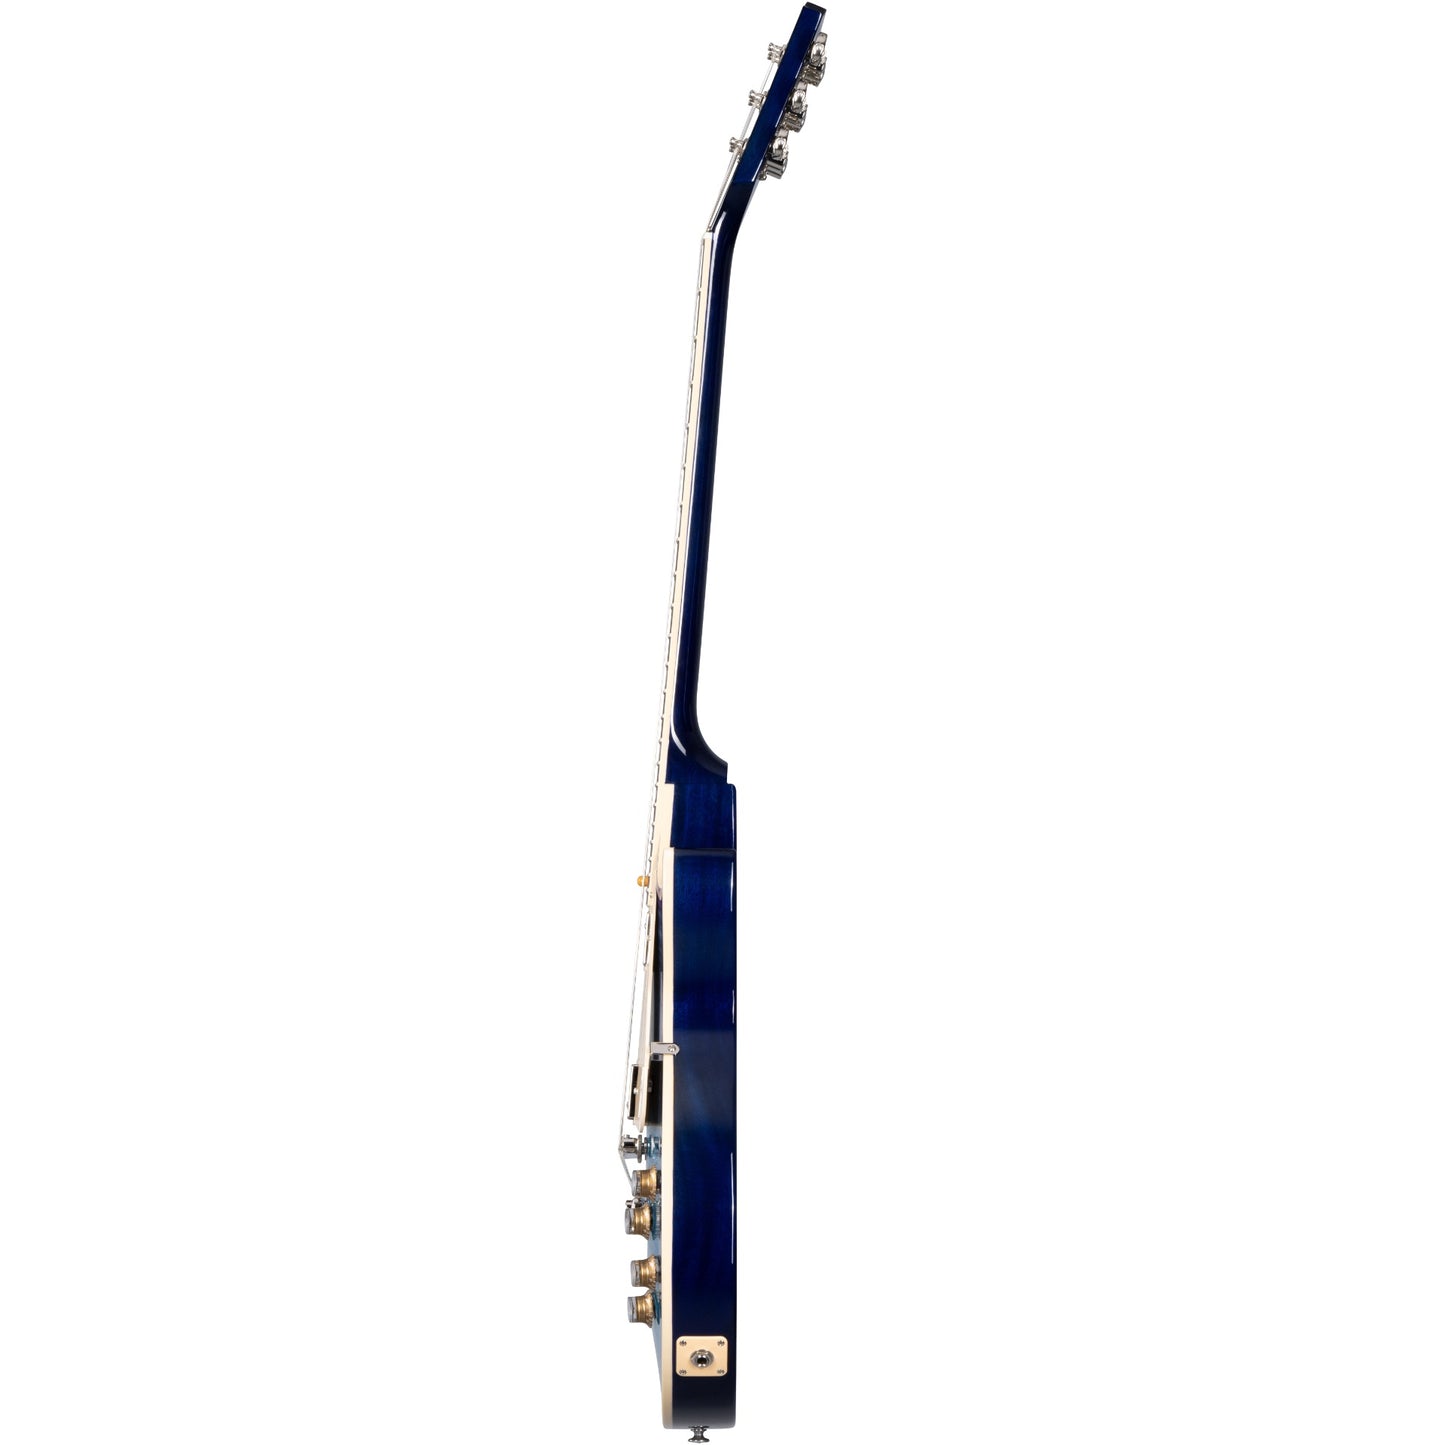 Gibson Les Paul Standard 60s Figured Top Electric Guitar - Blueberry Burst